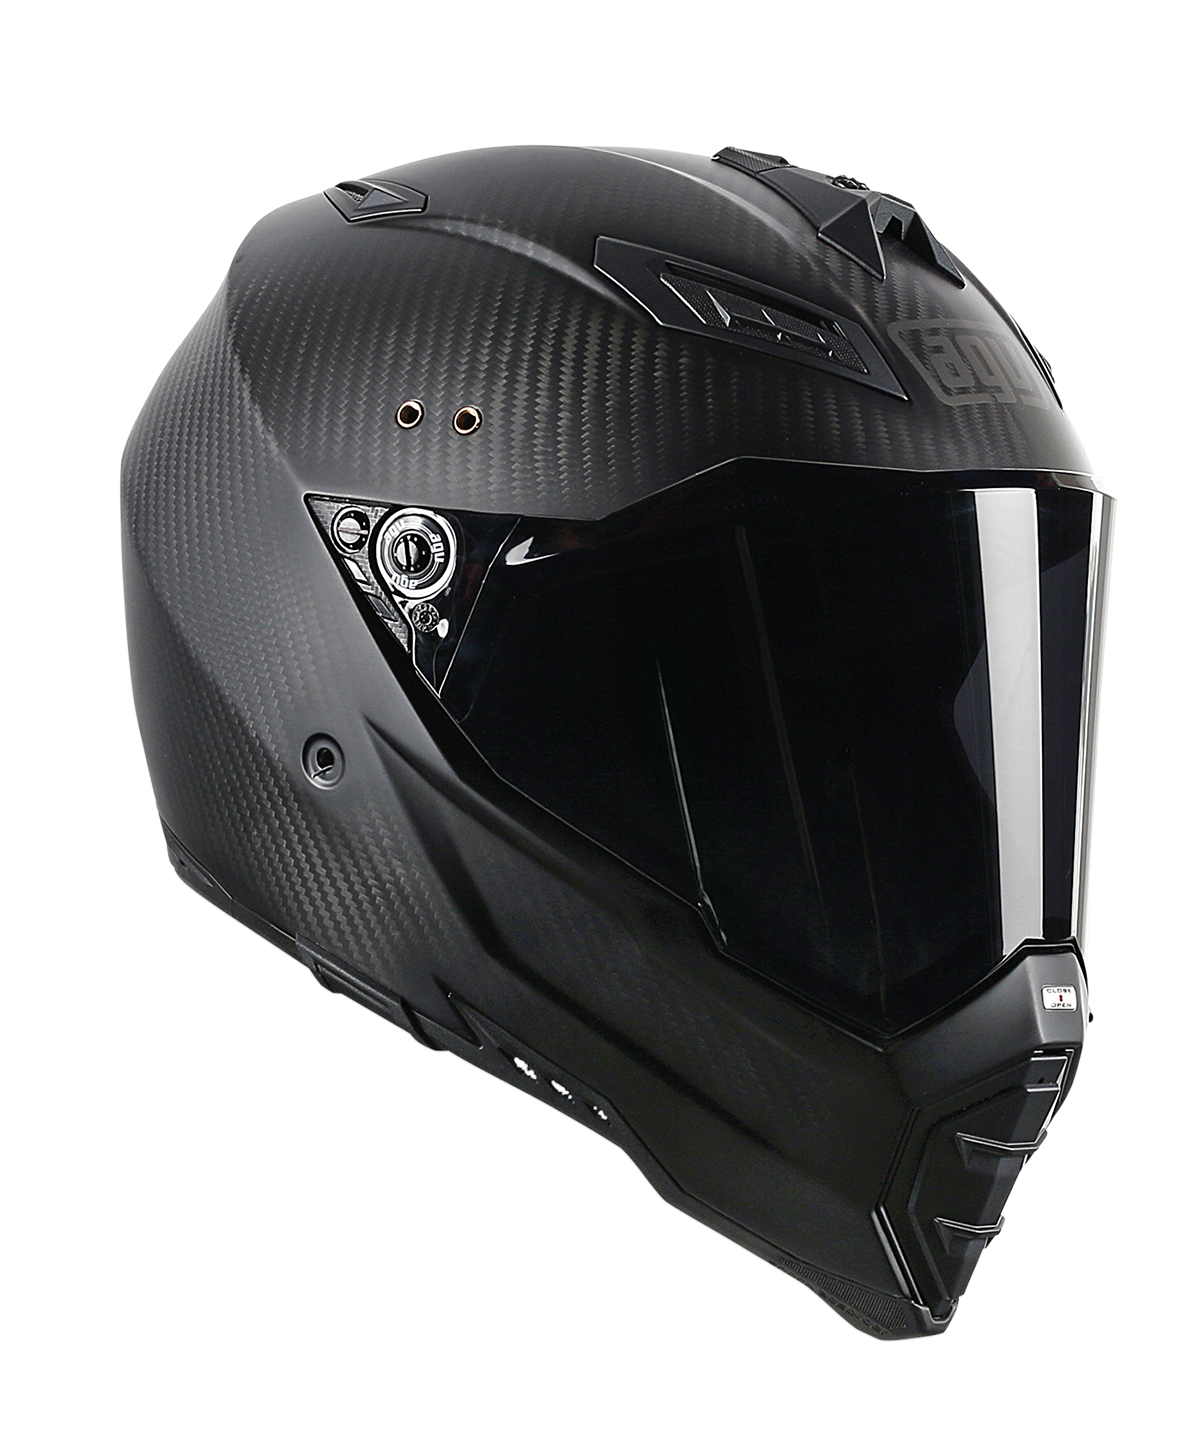 Dark Motorcycle Helmet PNG Transparent pngteam.com